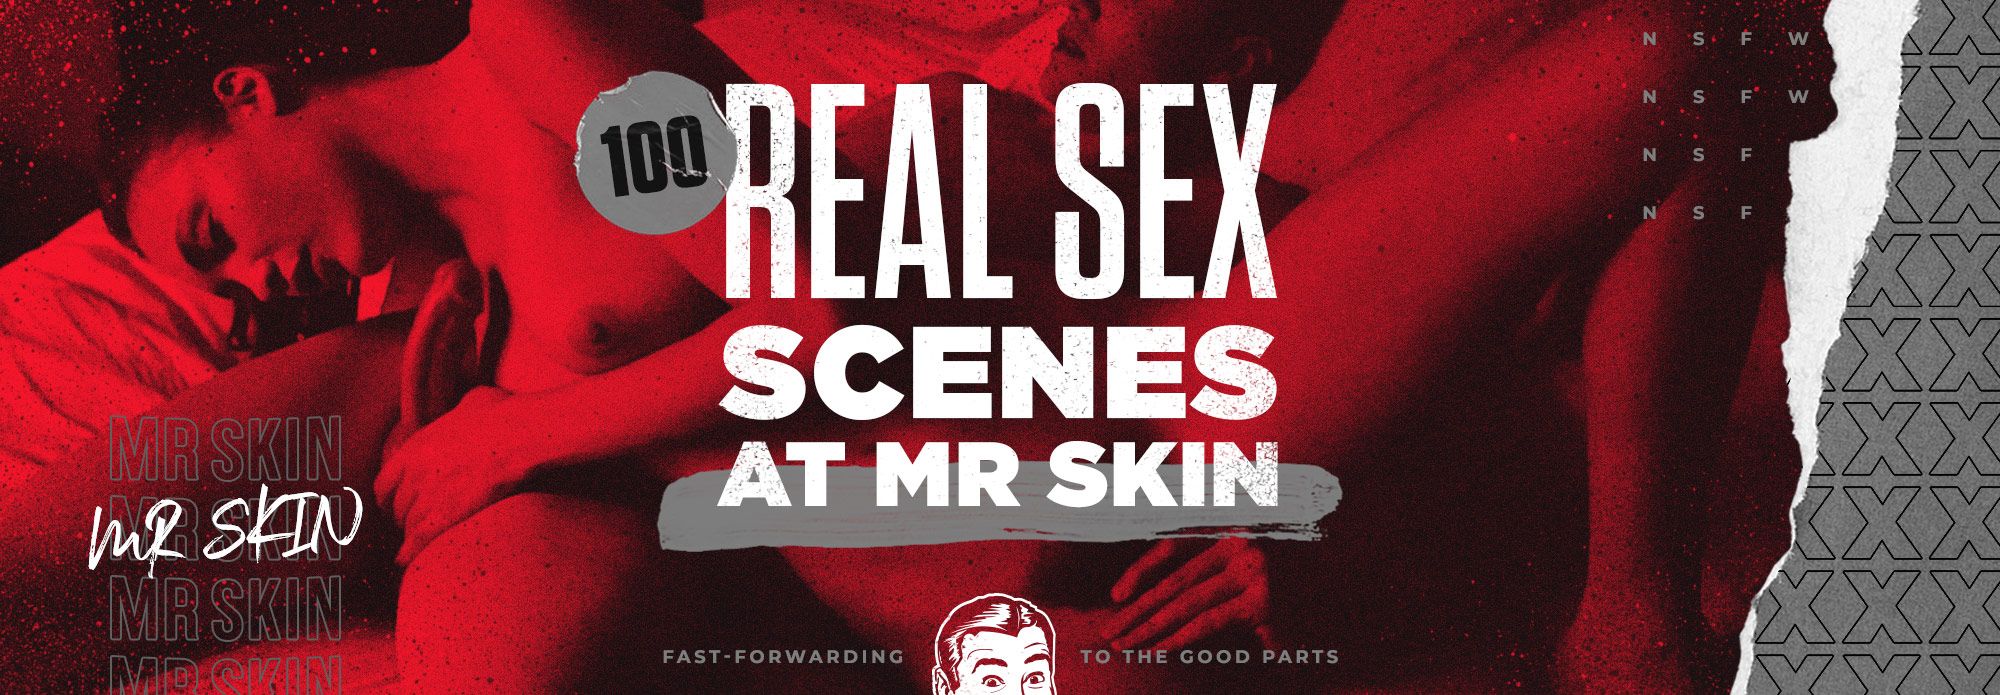 Mr skin best celeb skin movies